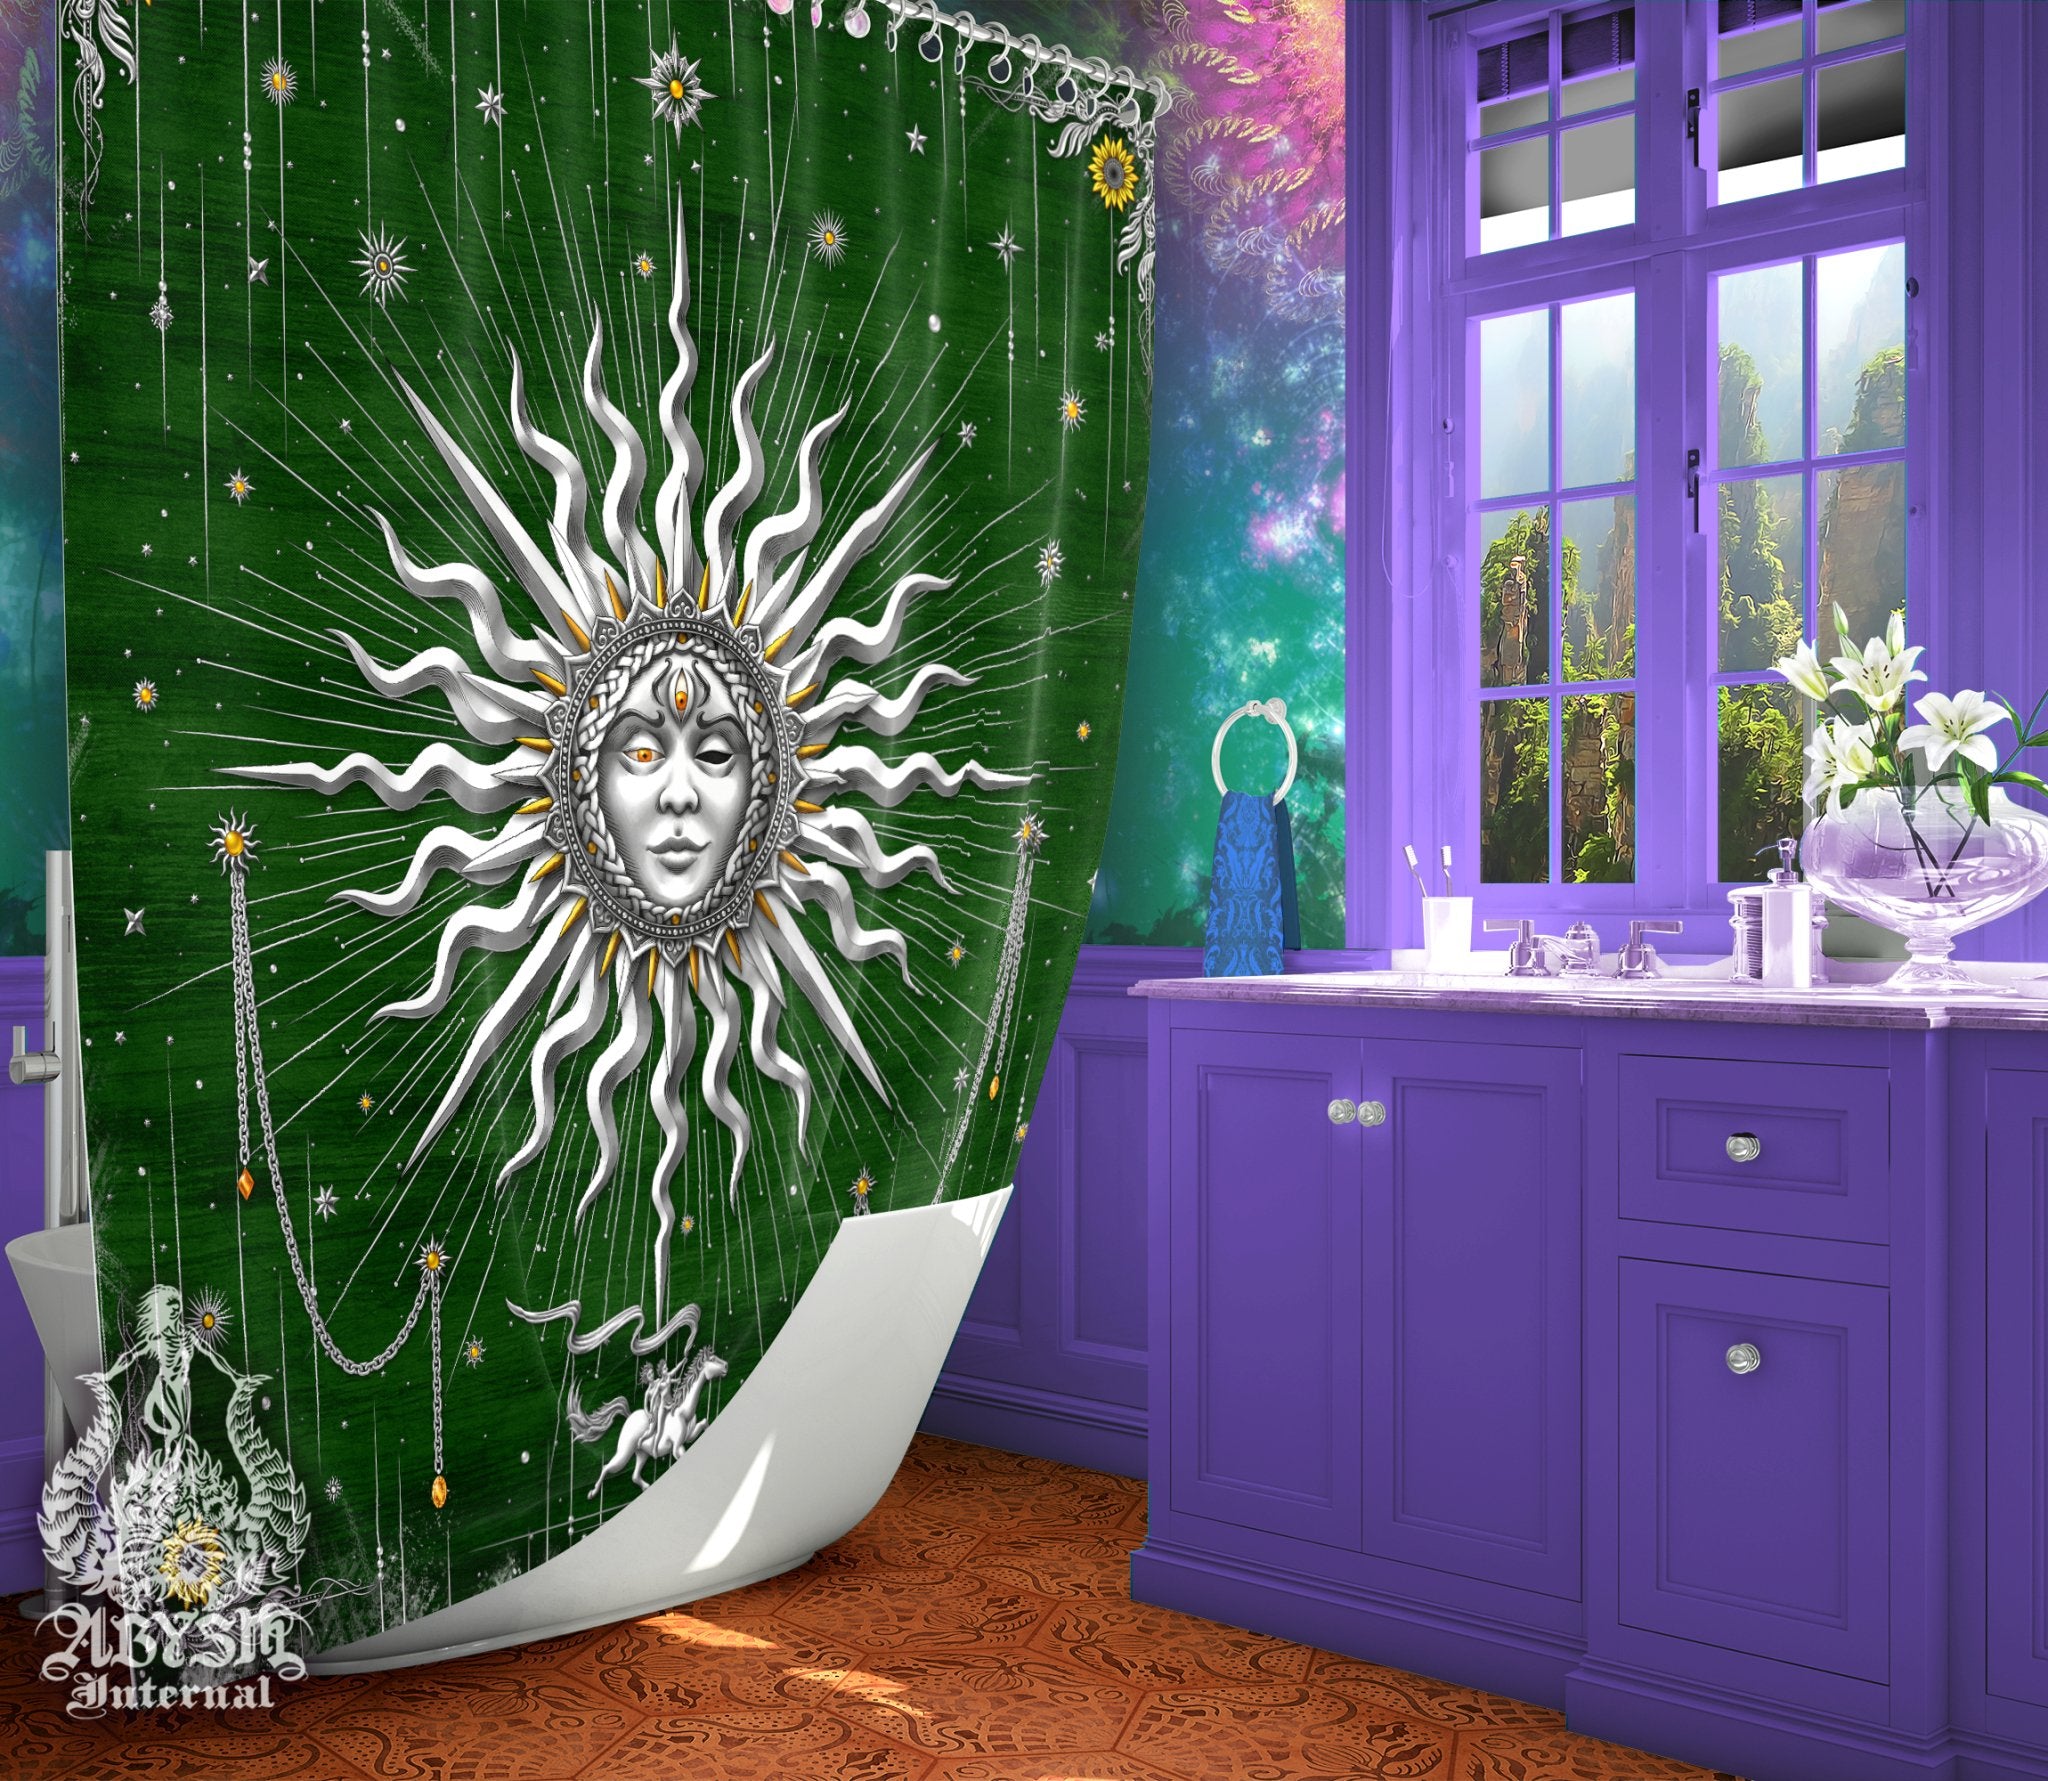 Silver Sun Shower Curtain, 71x74 inches, Indie Bathroom Decor, Tarot Arcana, Esoteric Art Print, Boho Home - 7 Colors - Abysm Internal